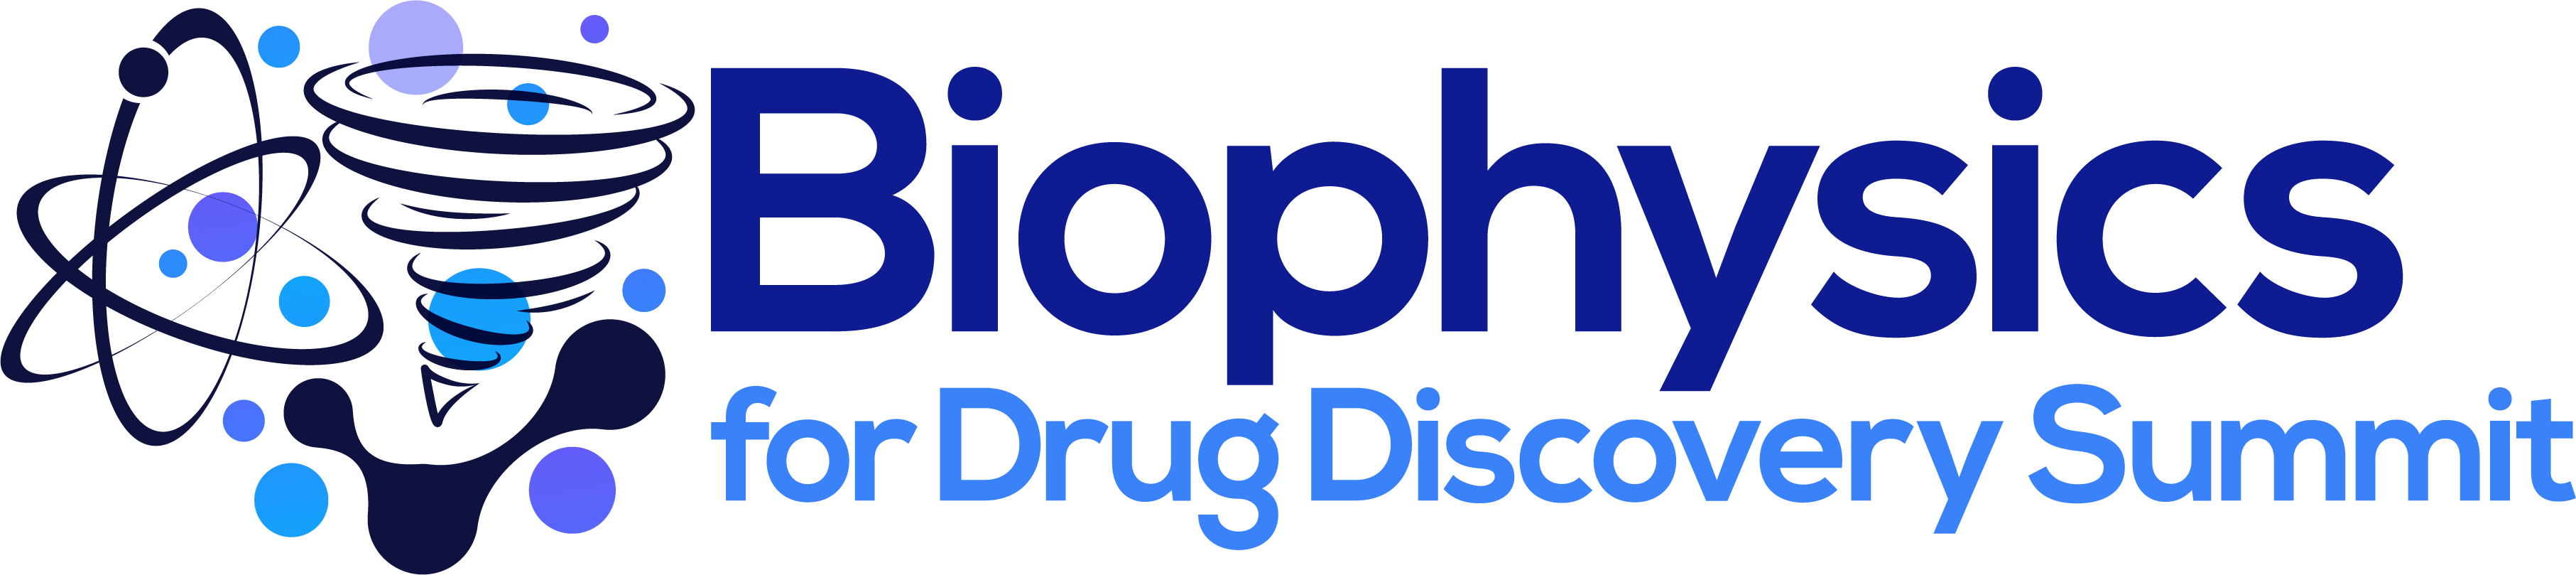 HW231031 48943 – Biophysics for Drug Discovery Summit logo final v3a